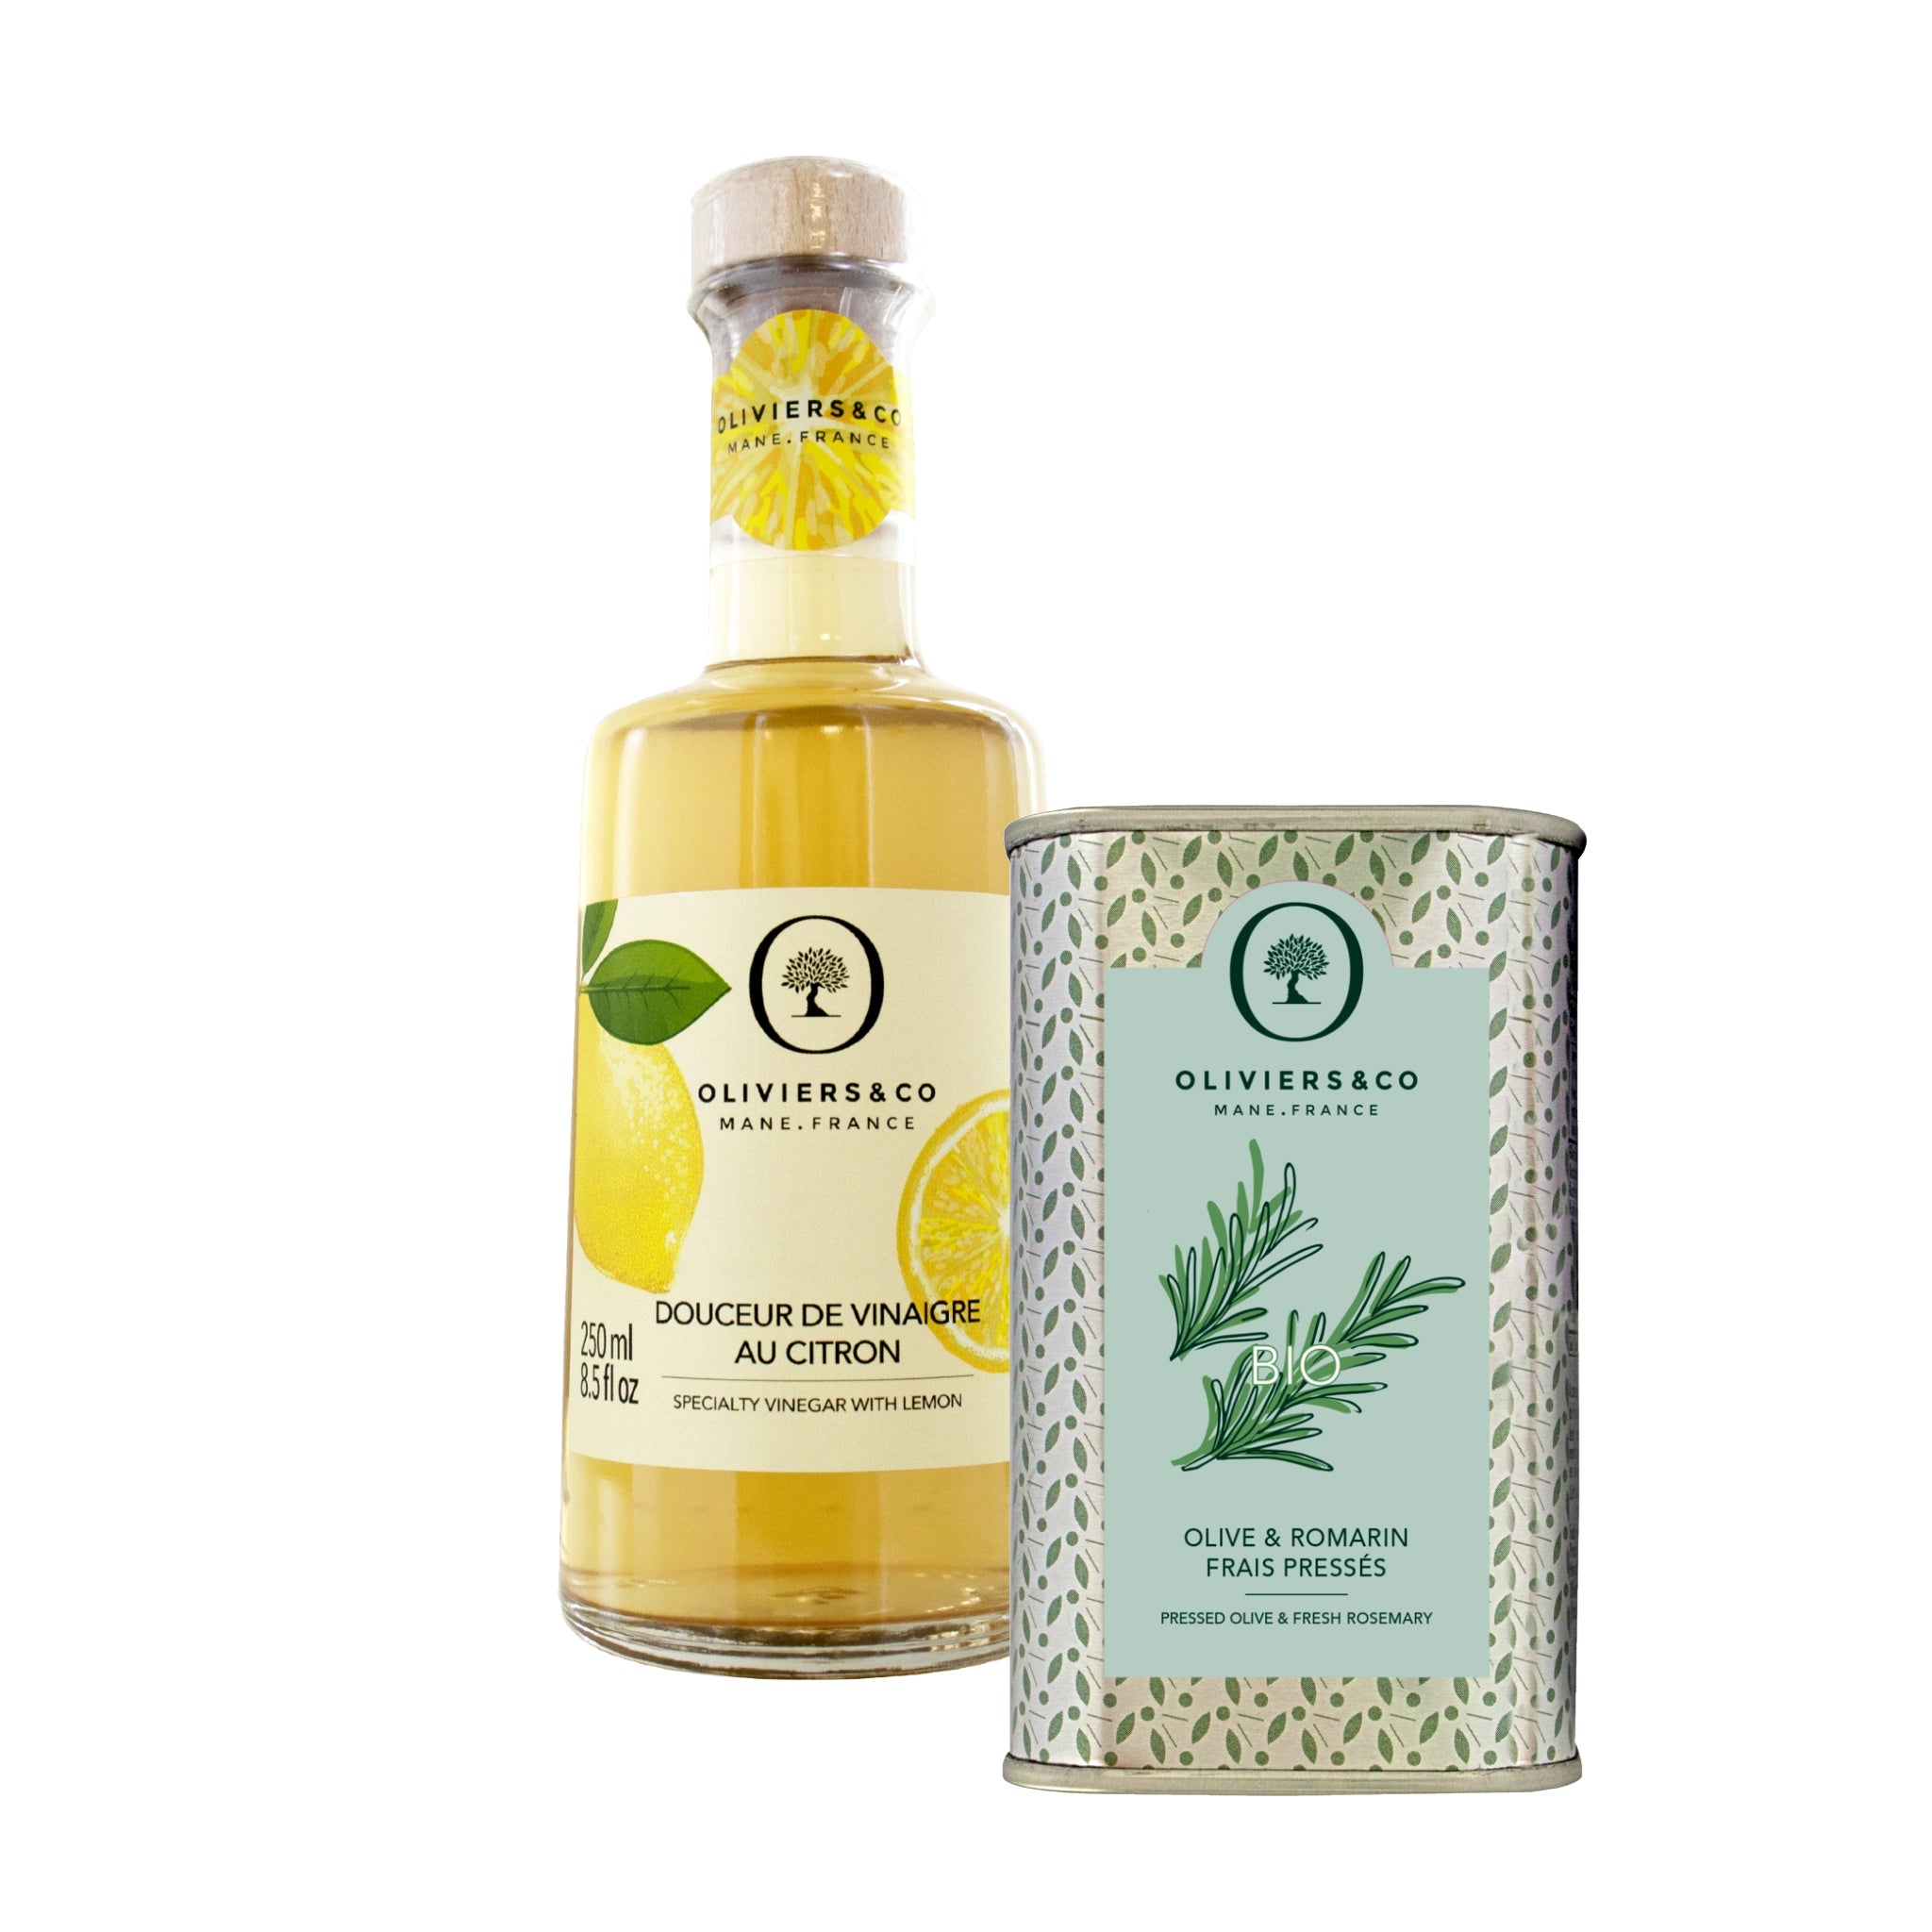 Olie & eddike sæt citroneddike og økologisk rosmarinolie fra Oliviers & Co